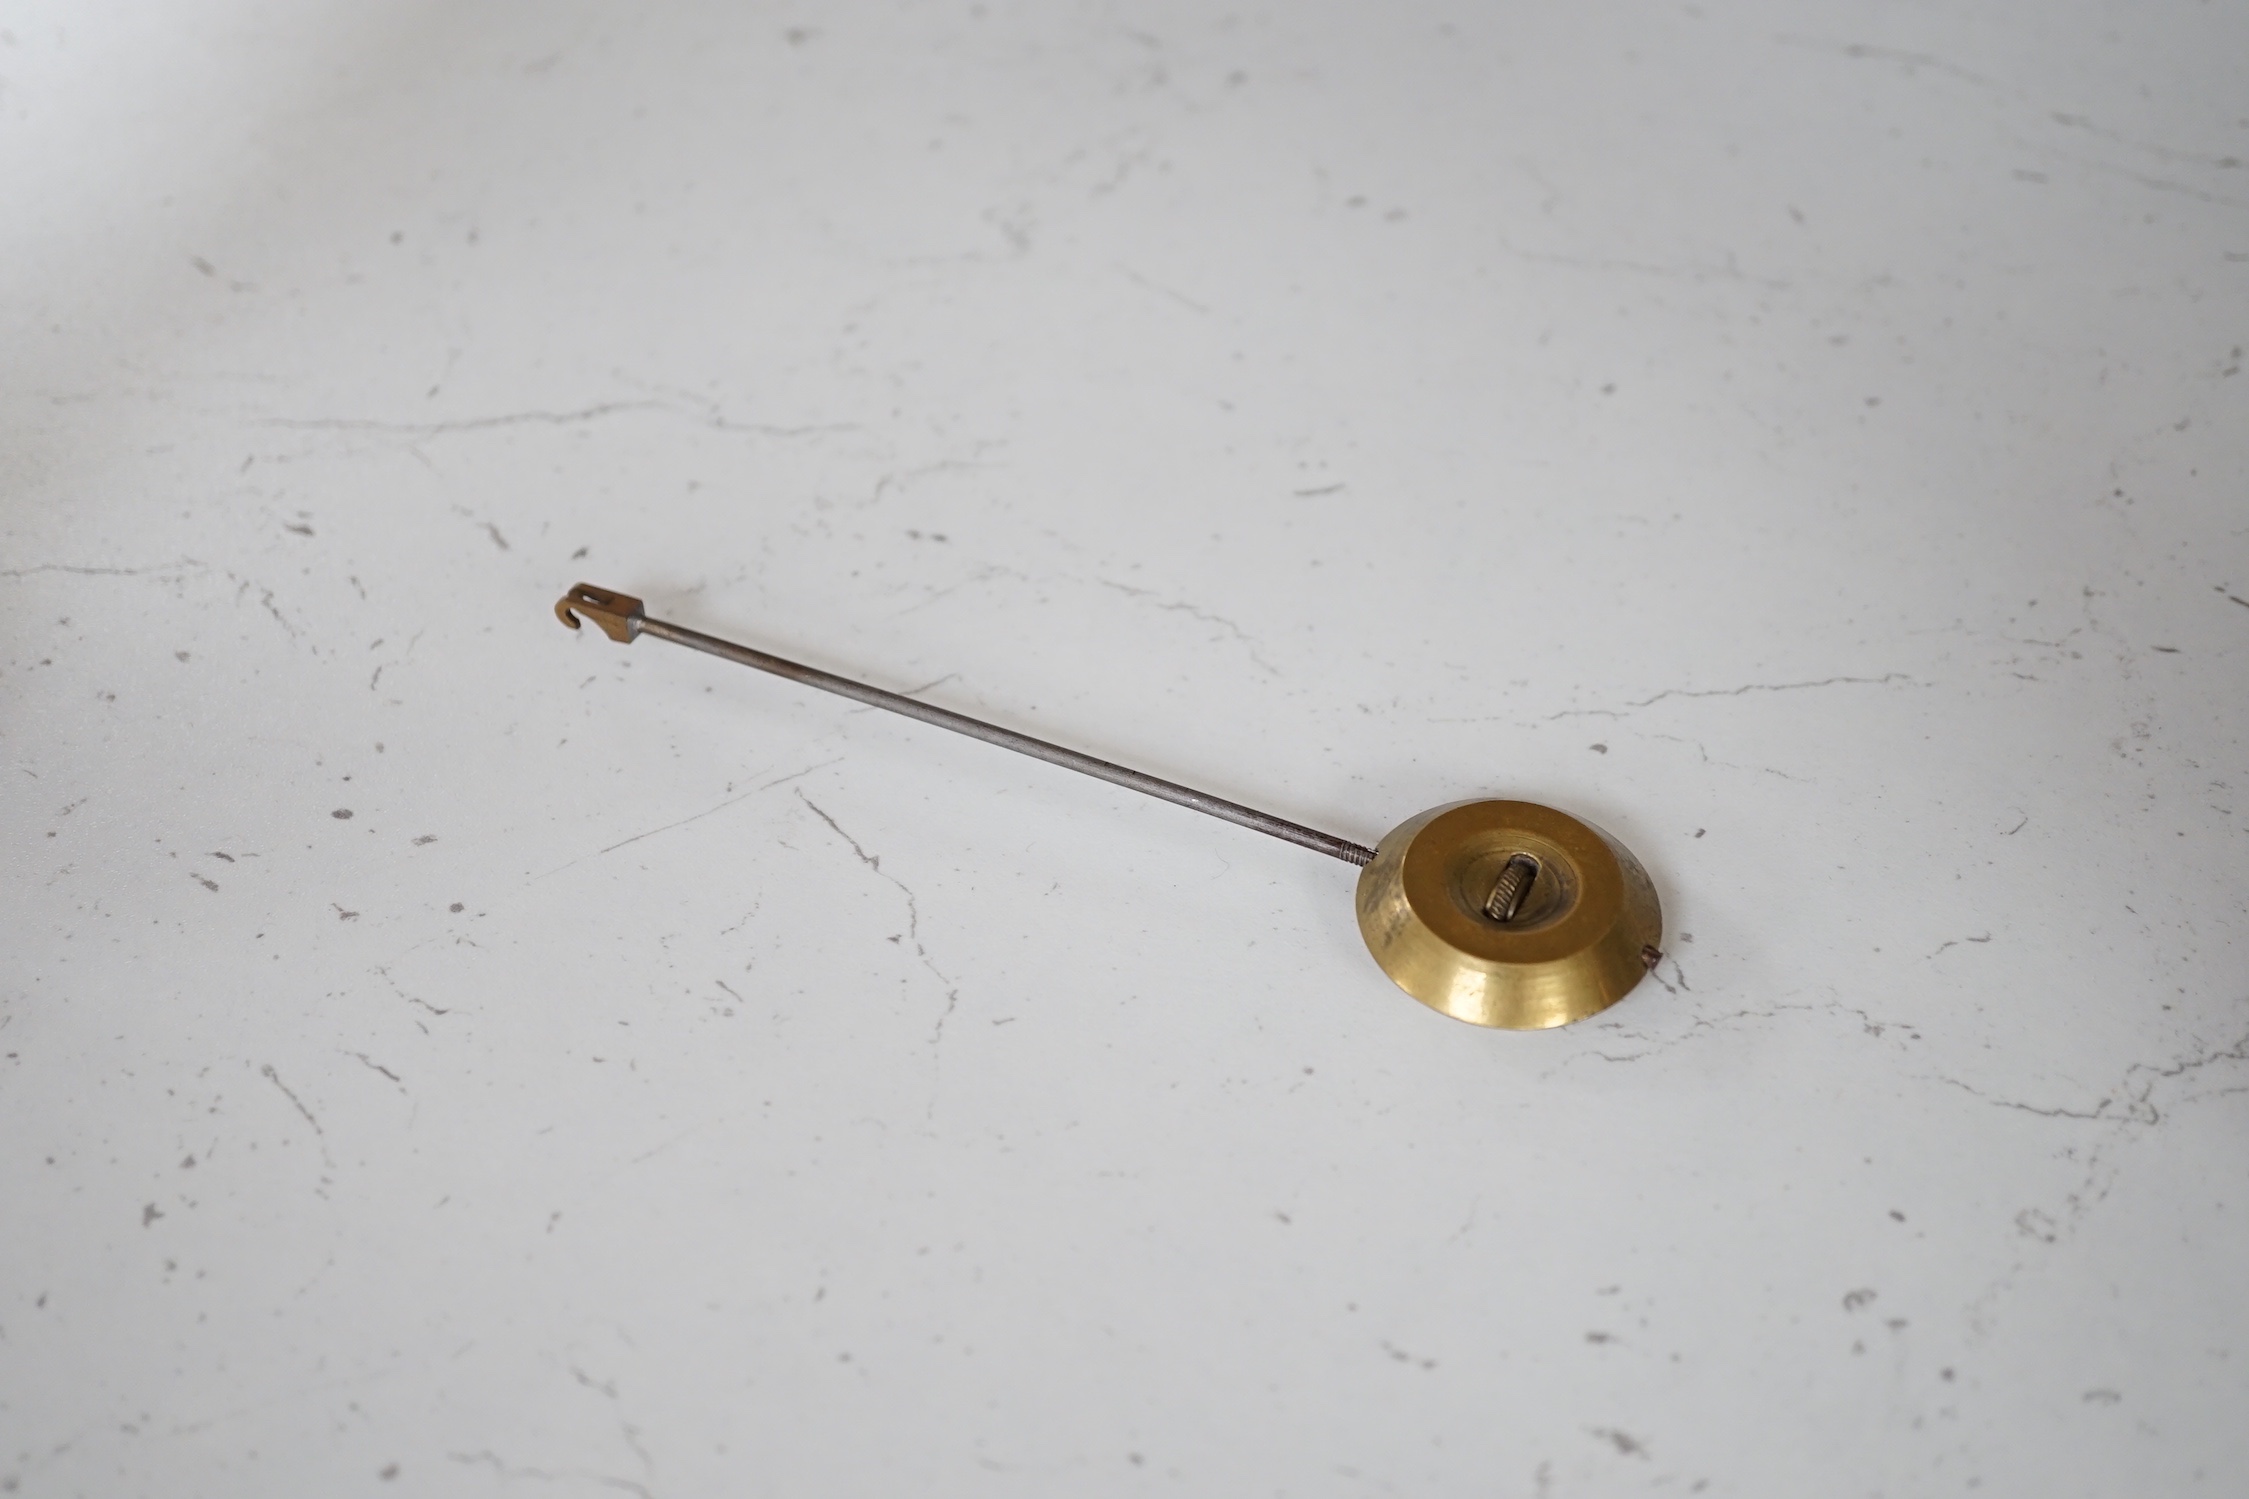 A French gilt metal and porcelain clock garniture. 36.5cm